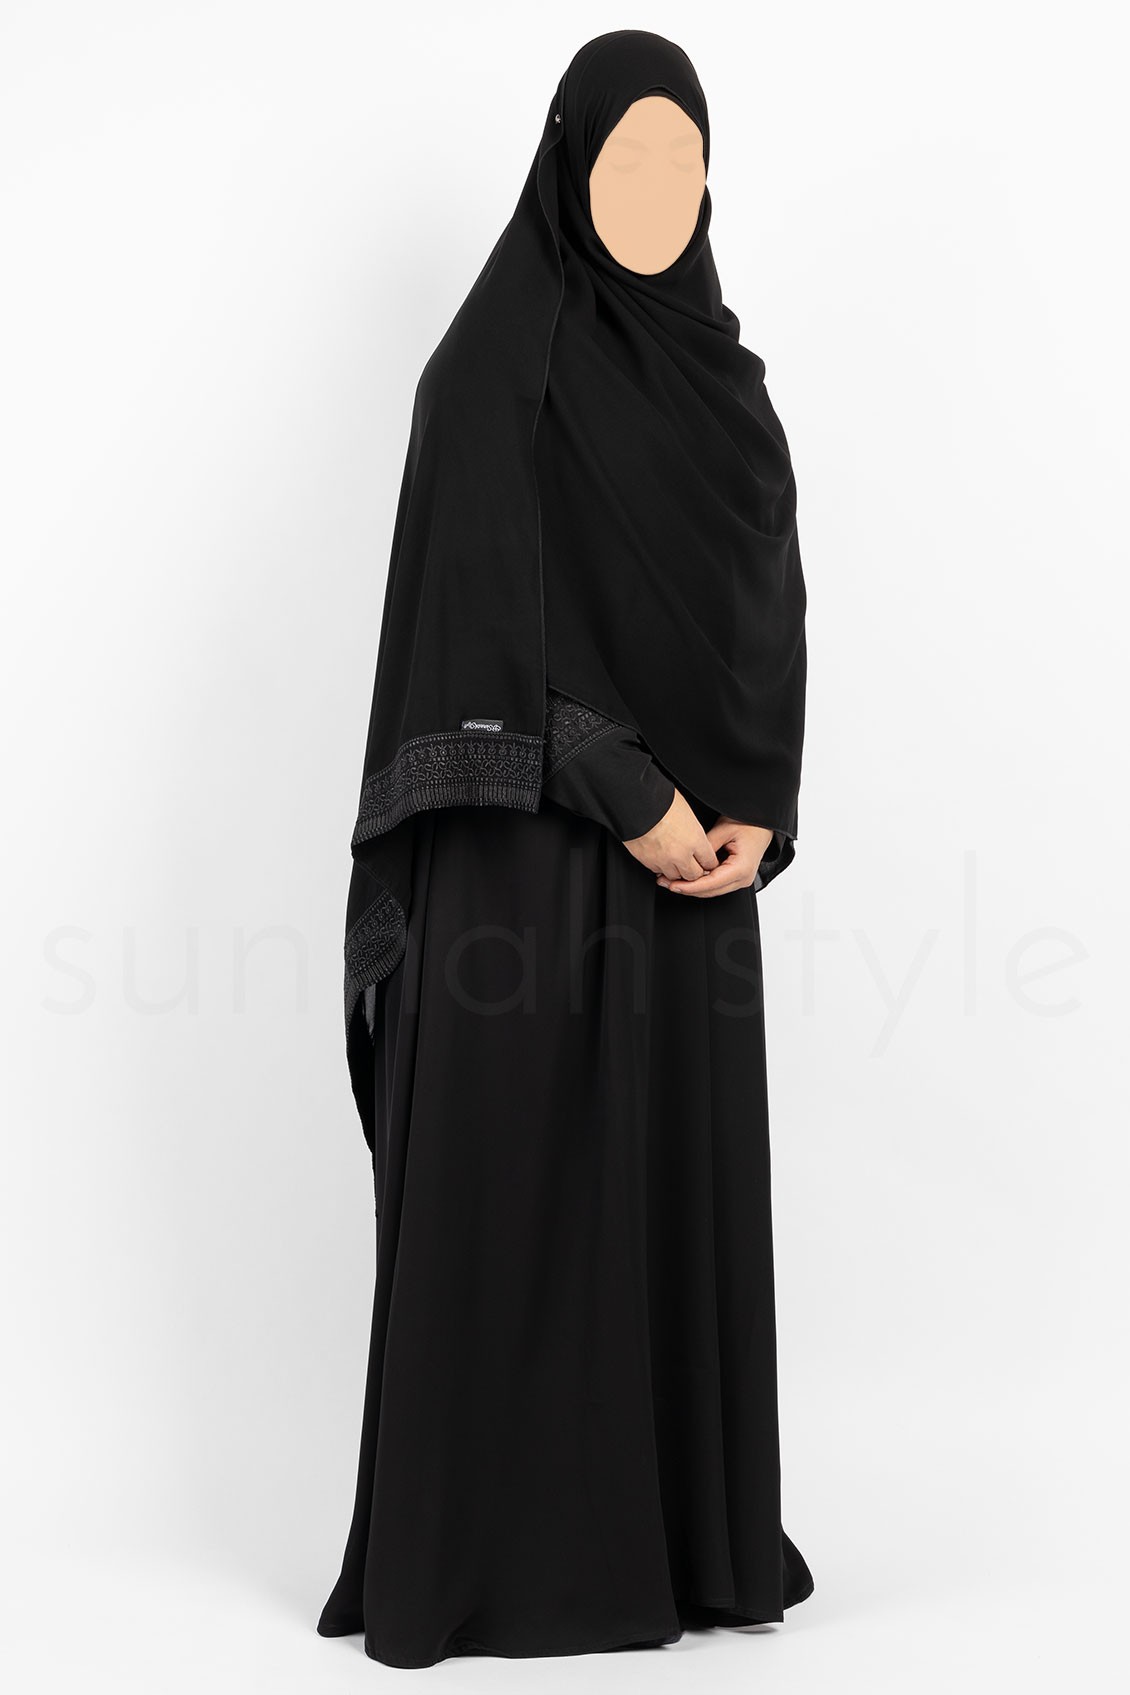 Sunnah Style Empress Shayla Black Embroidered Hijab XL